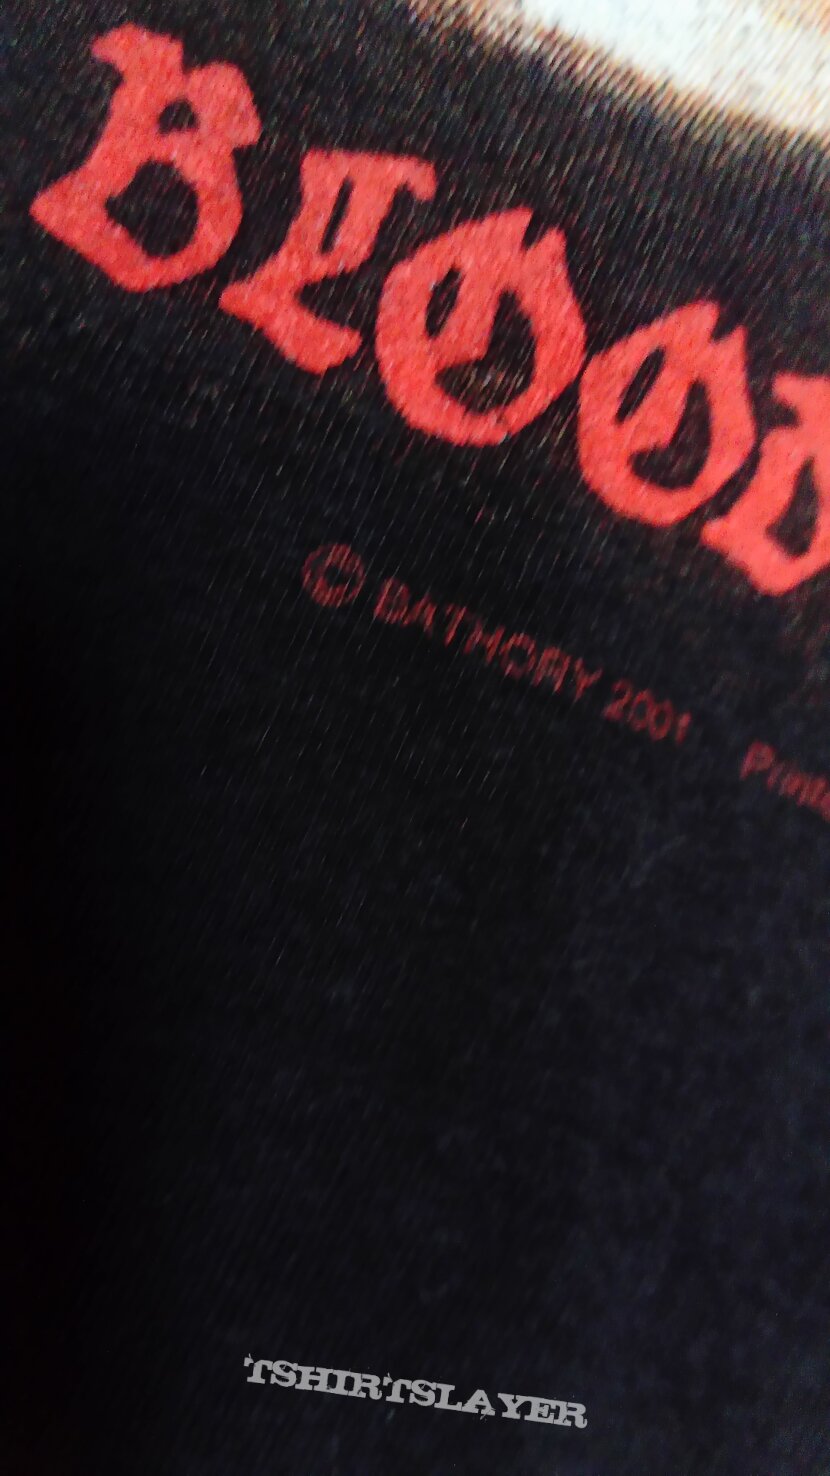 Bathory - Blood Fire Death Long Sleeve 2001